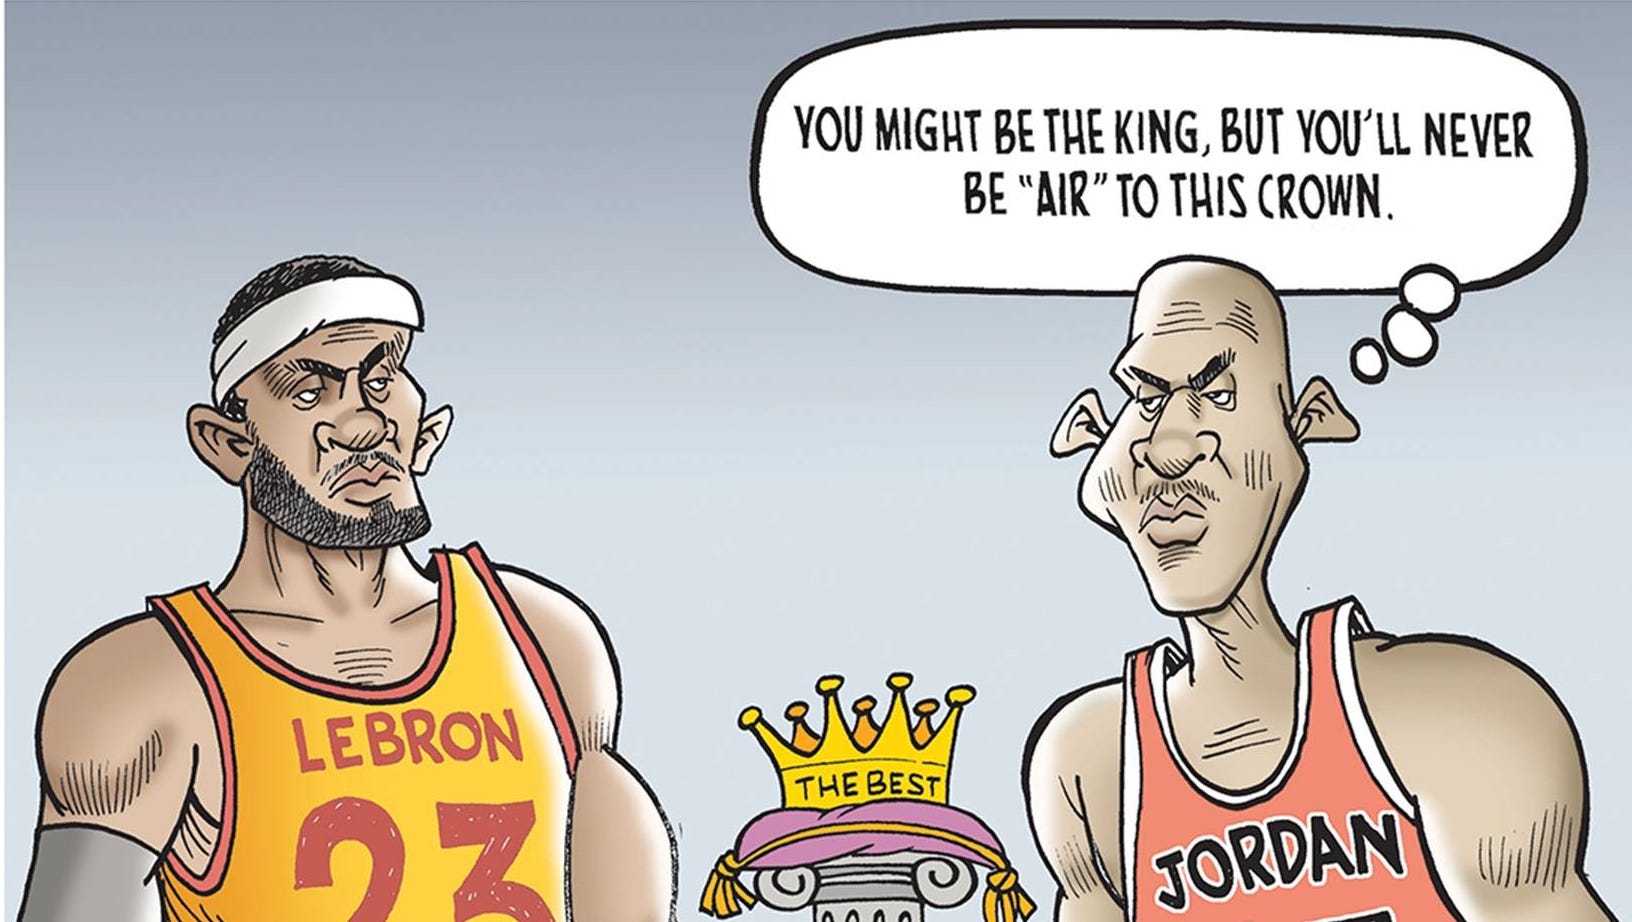 LeBron James vs. Michael Jordan cartoon caption contest winner!